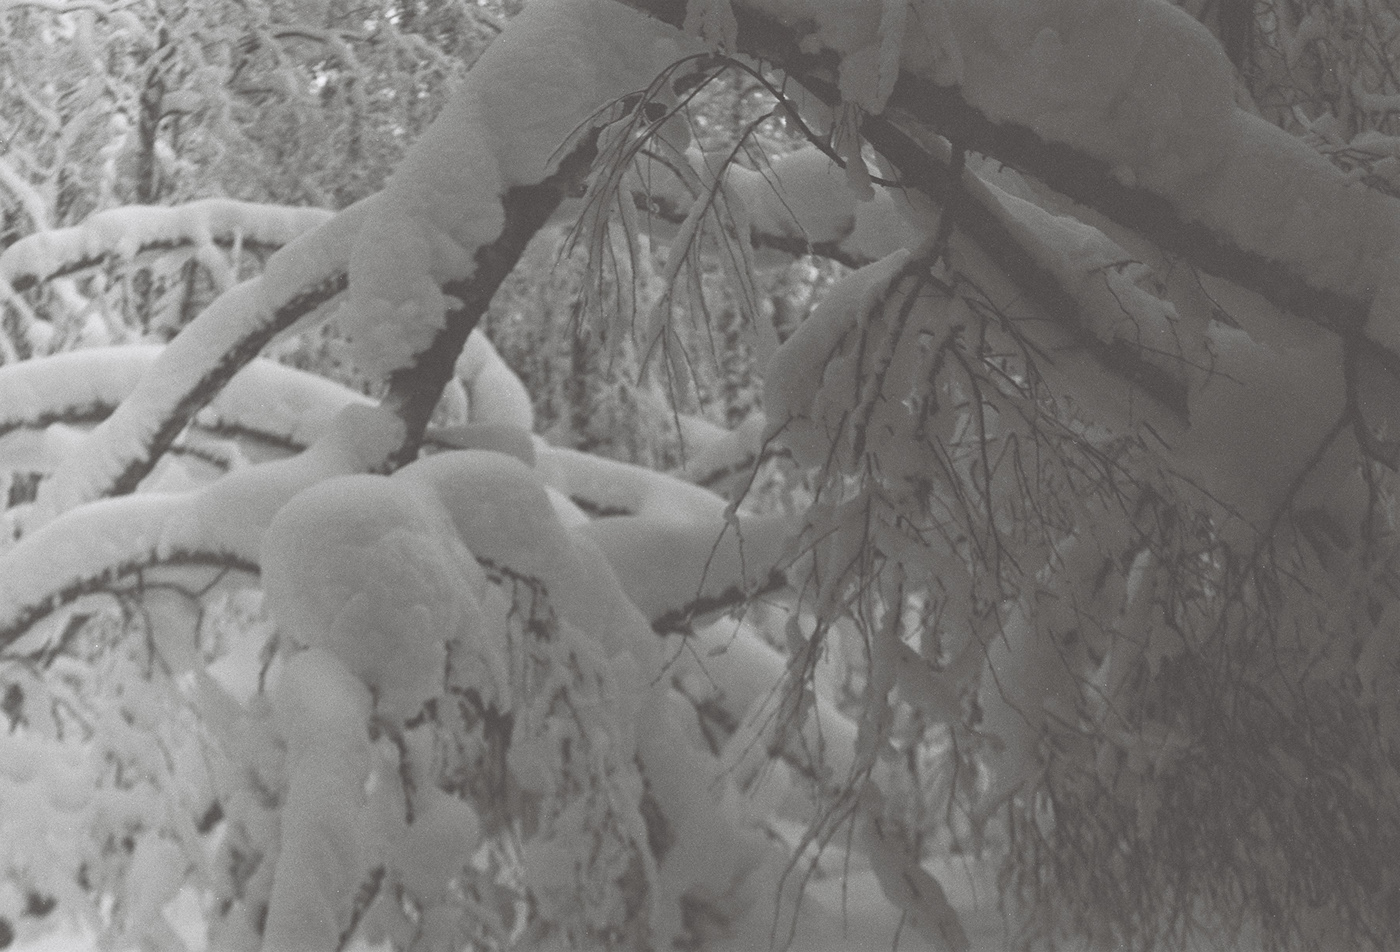 argentique film photography black and white trees Landscape Nature neige hiver paysage dark ecology